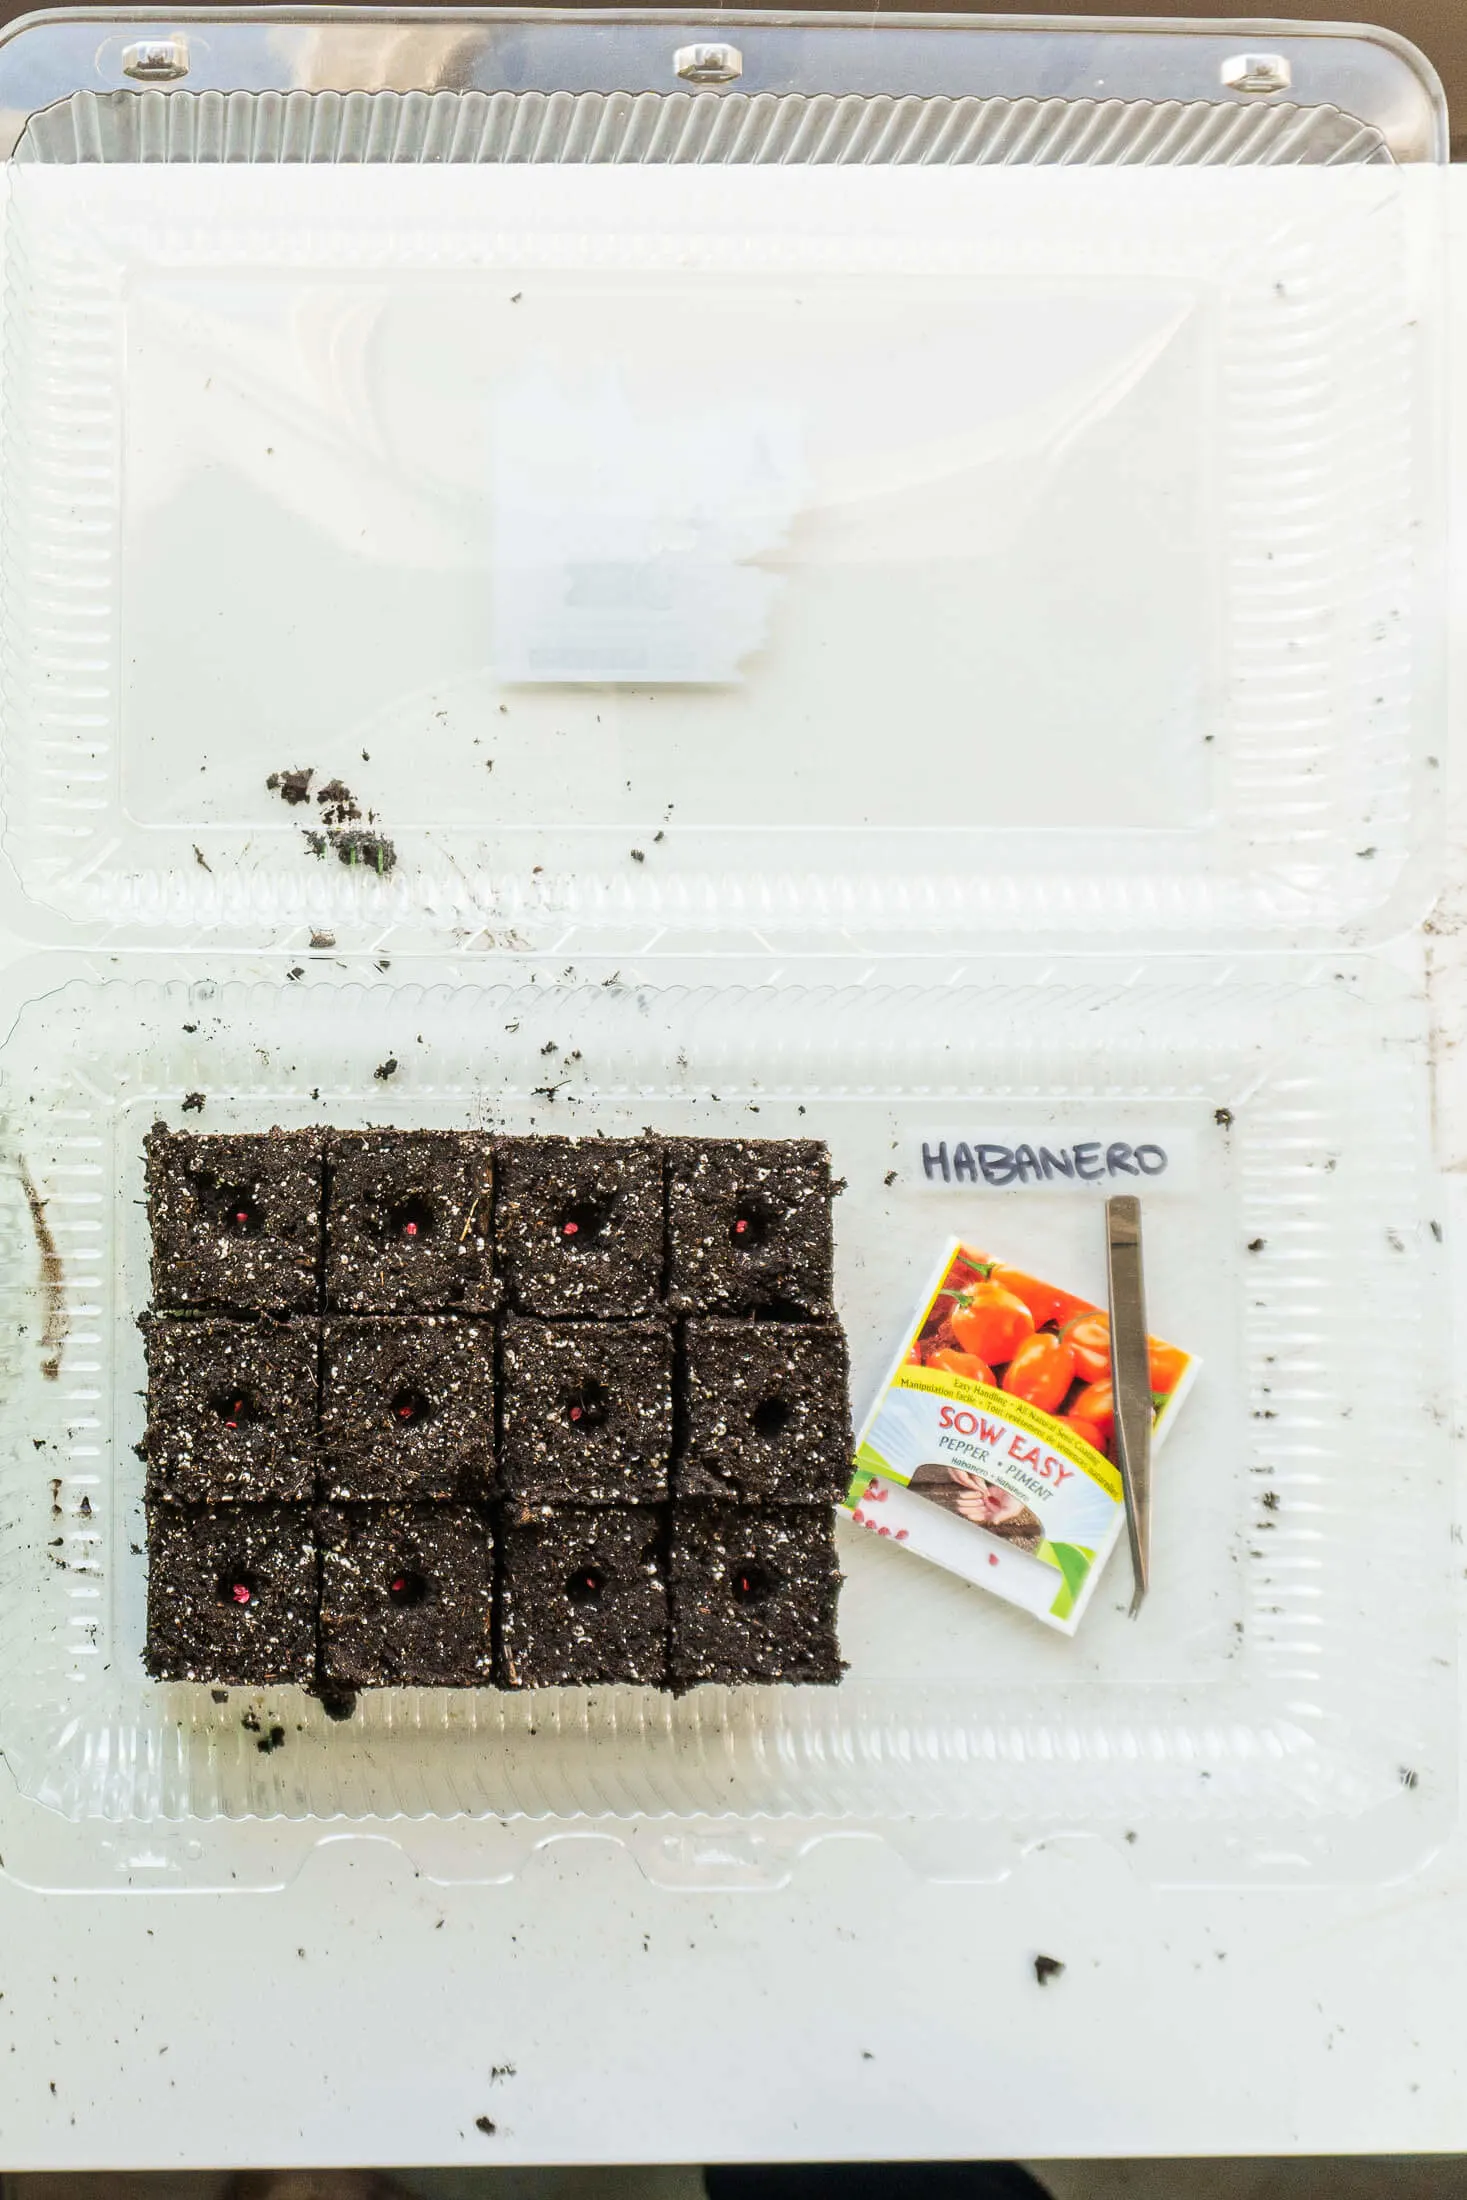 Seeding soil blocks with habanero seeds.